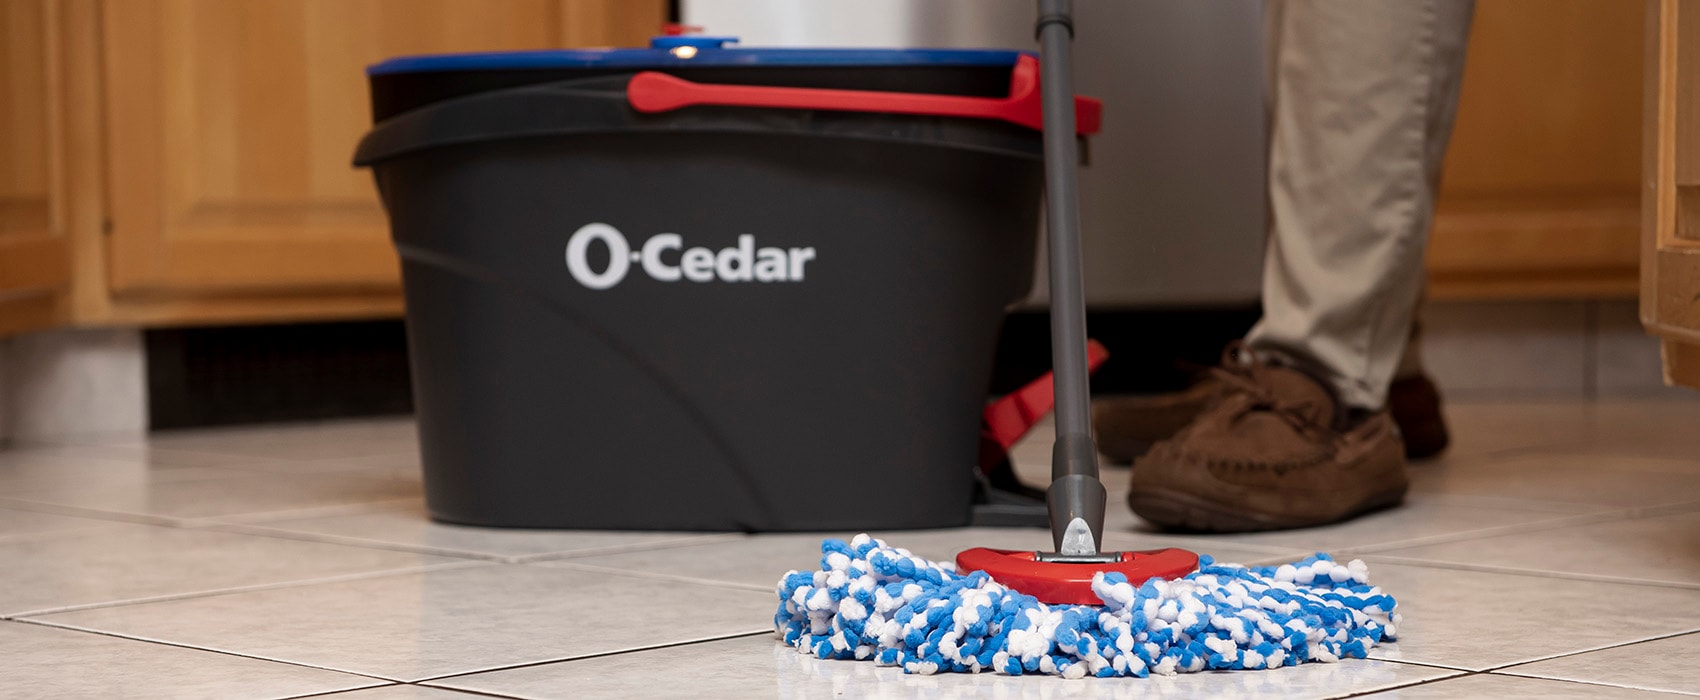 O-Cedar mop and bucket